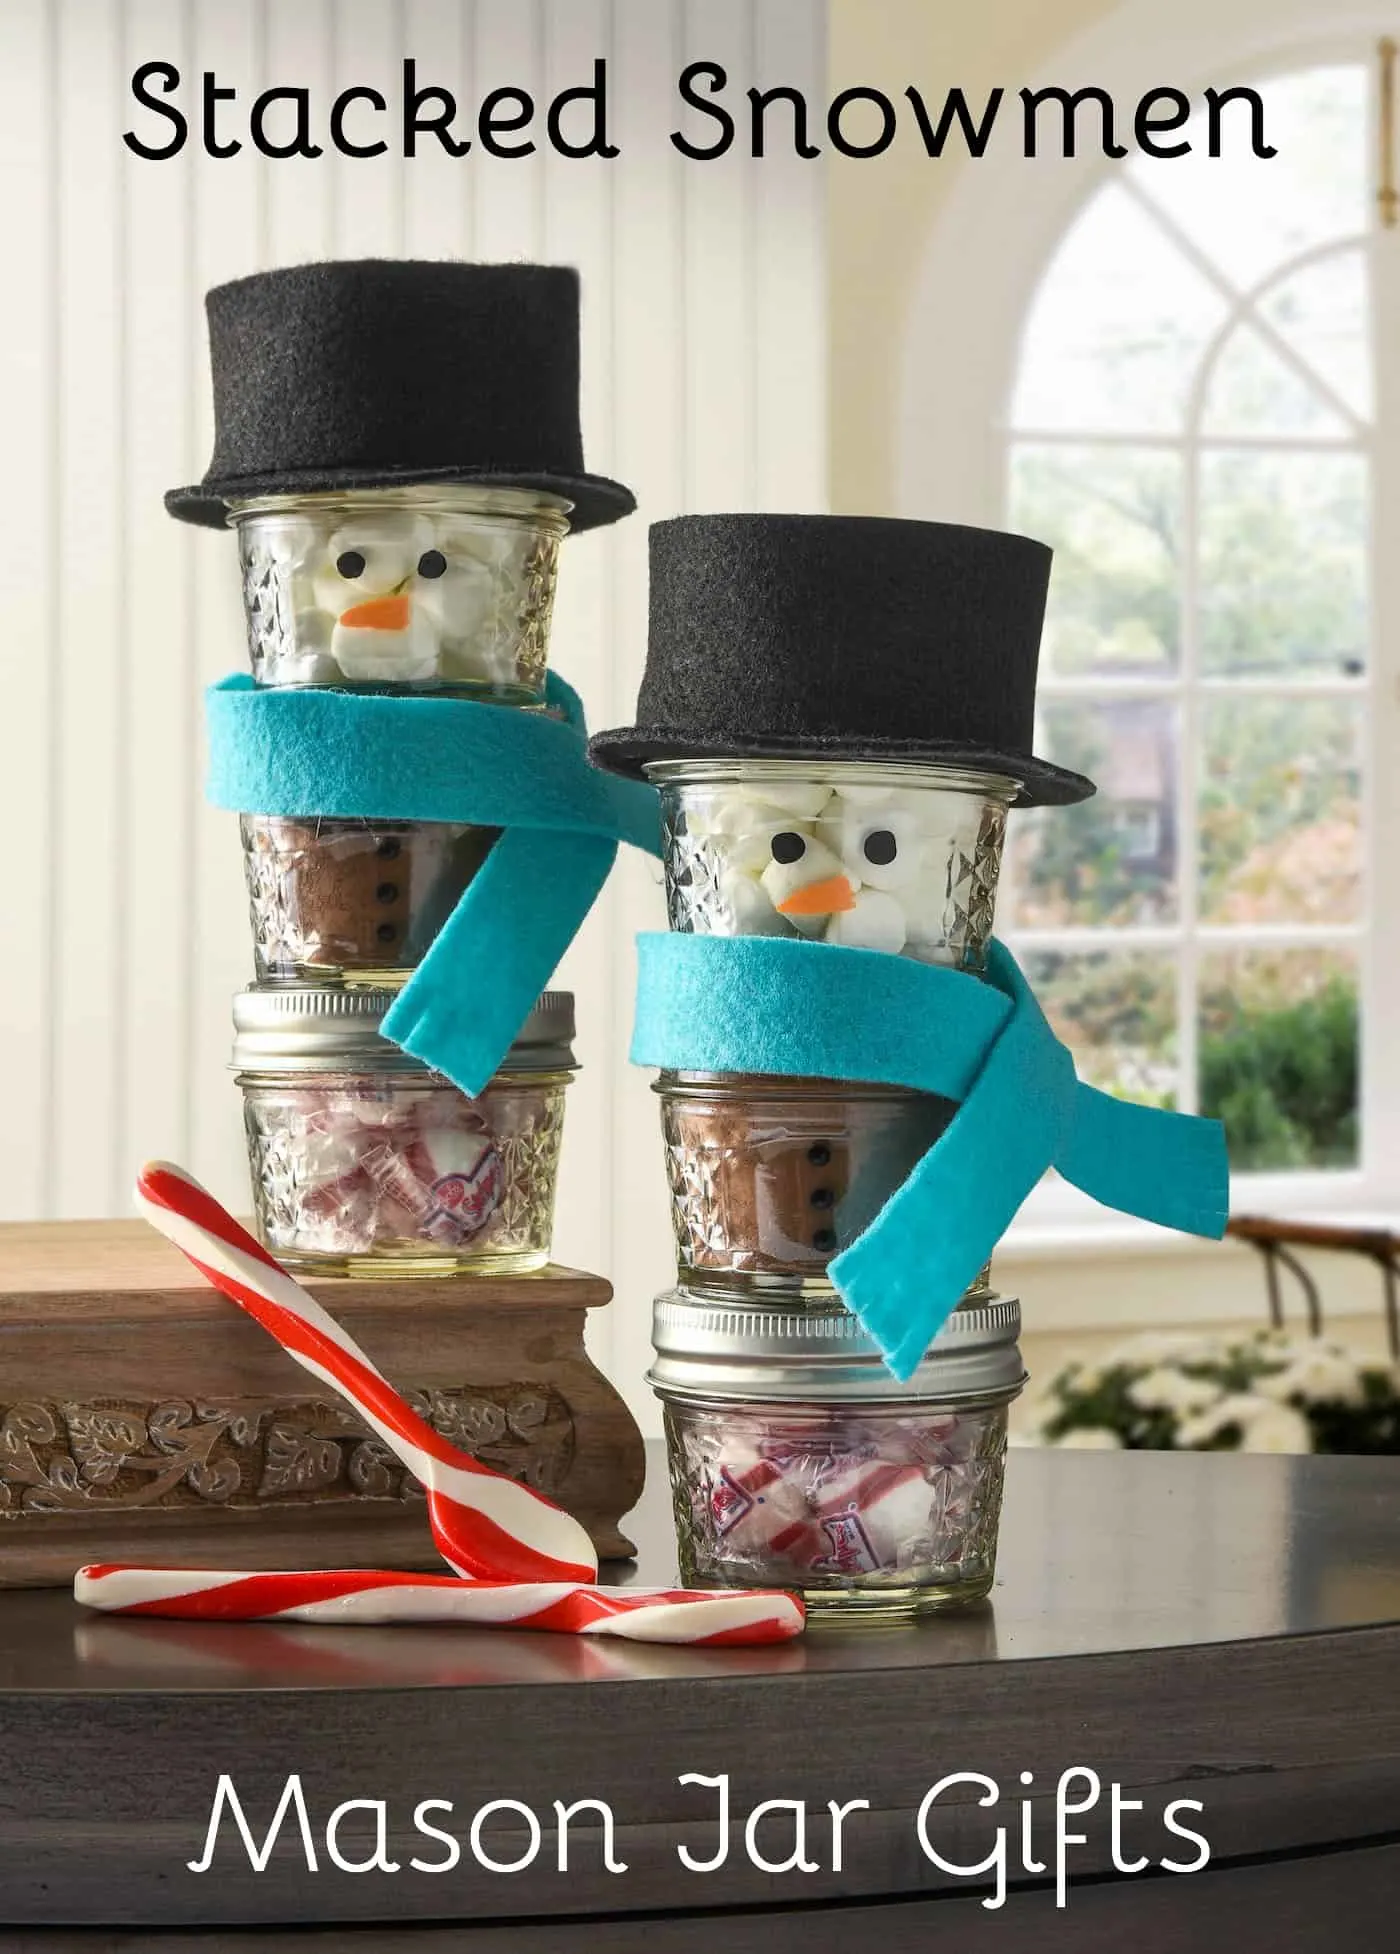 Snowman Hot Chocolate Jars Make Great Gifts!